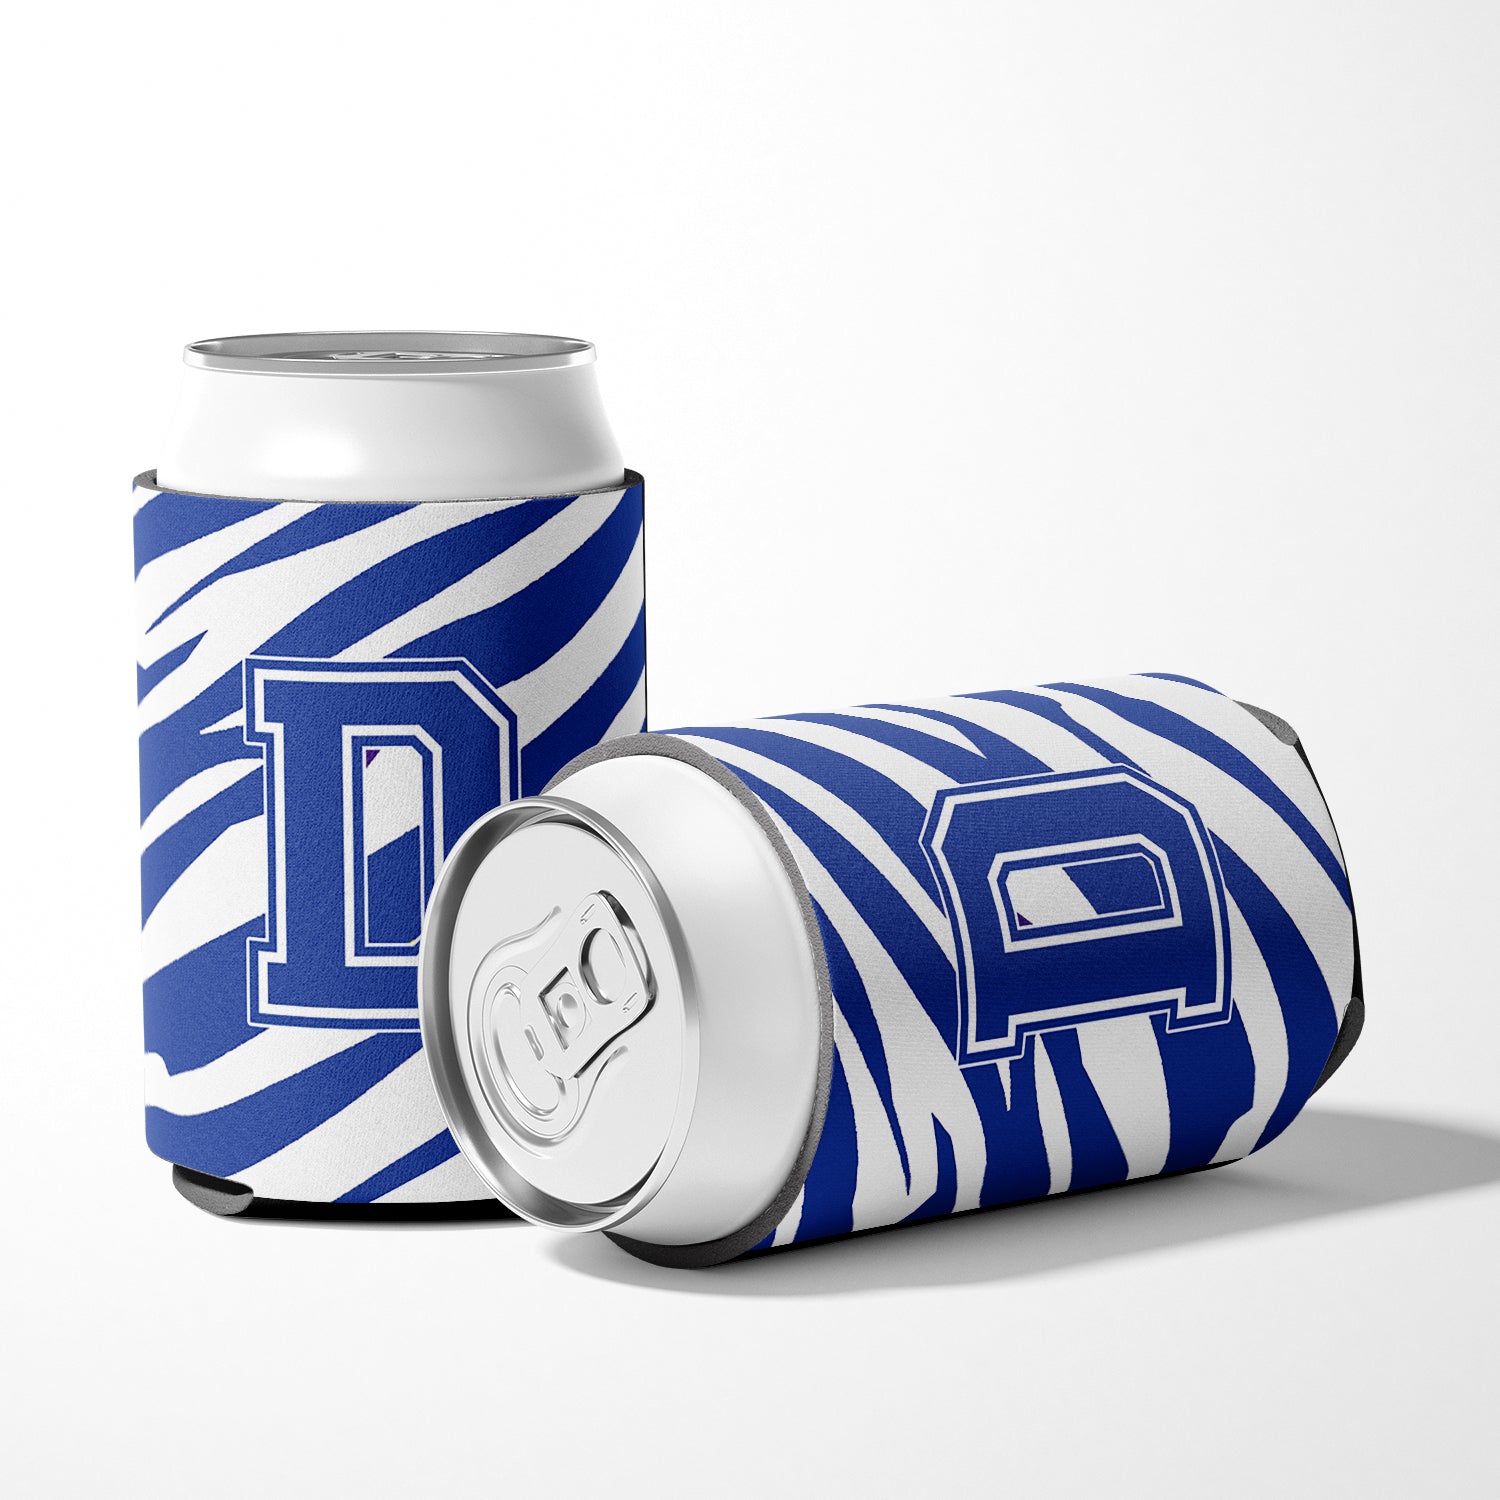 Letter D Initial Monogram - Tiger Stripe Blue and White Can Beverage Insulator Hugger